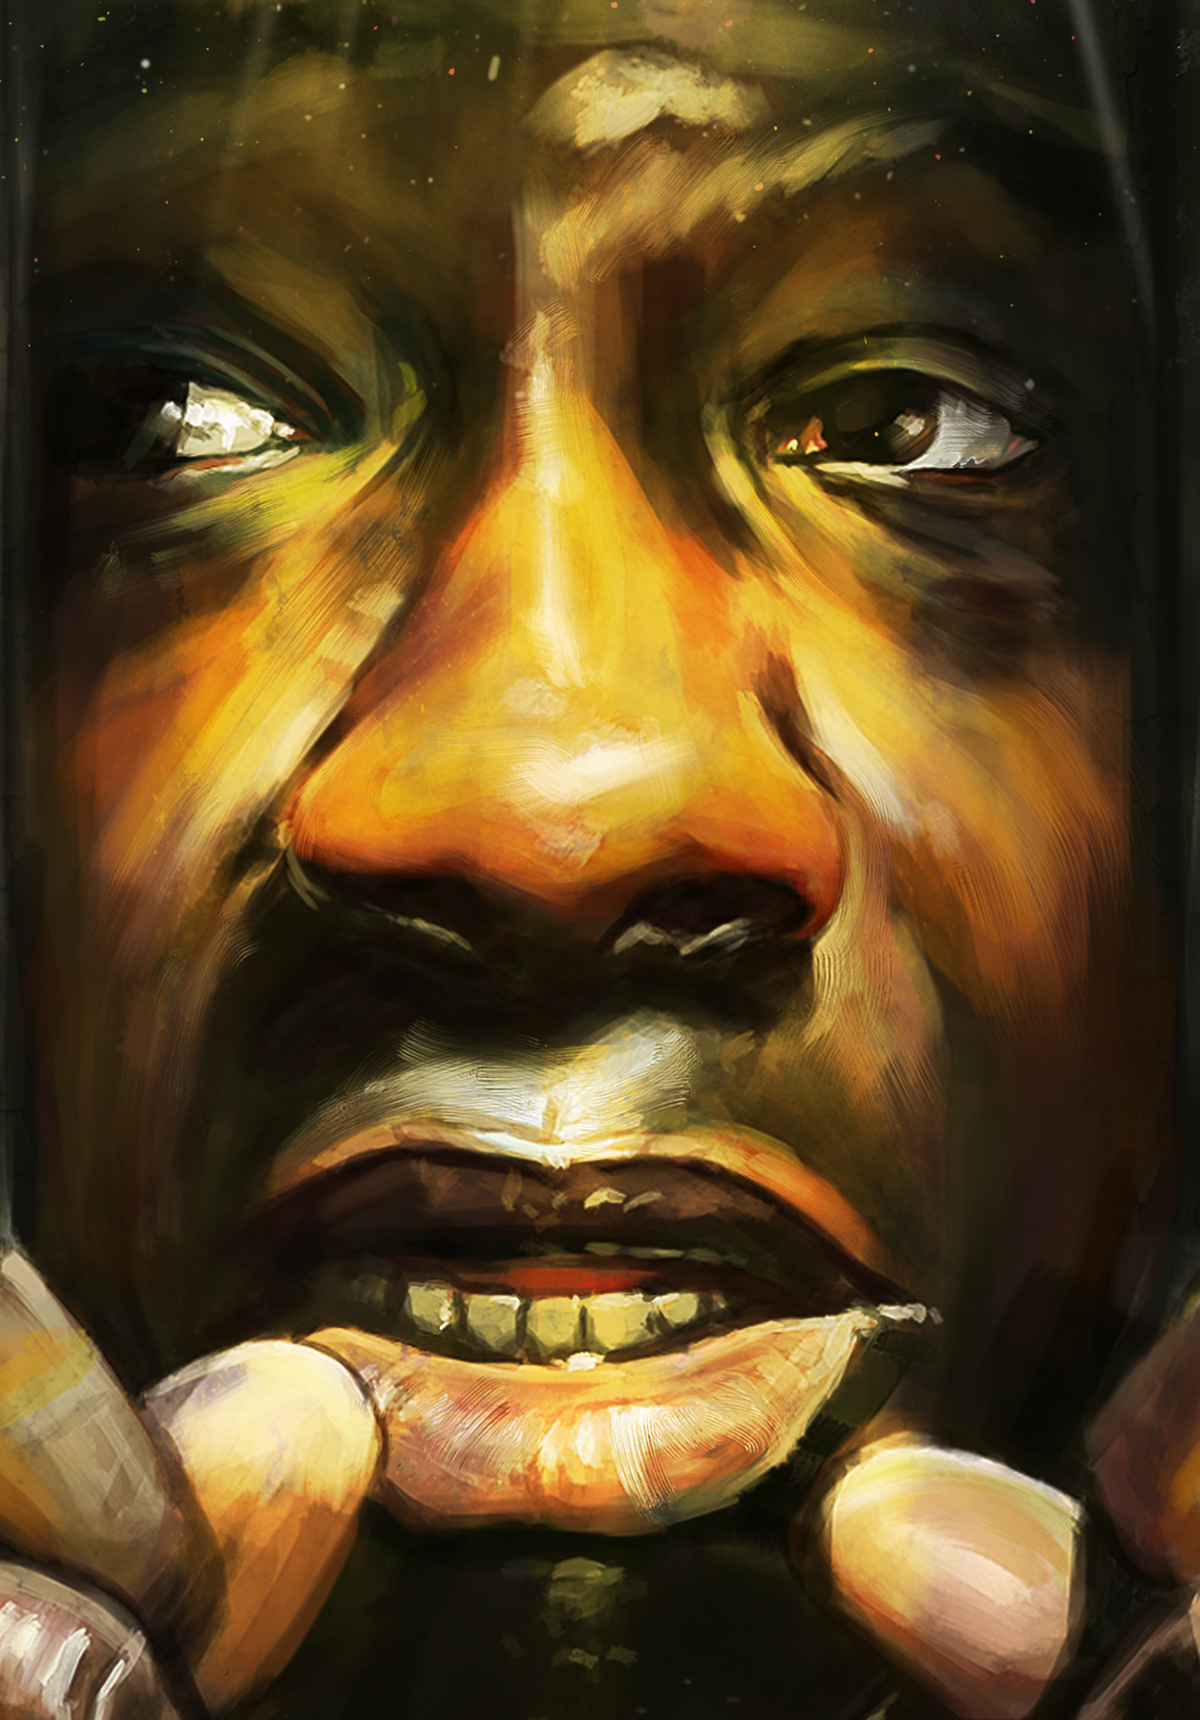 the green mile Stephen King Frank Darabont movie poster digital painting Oil Painting Fan Art portrait